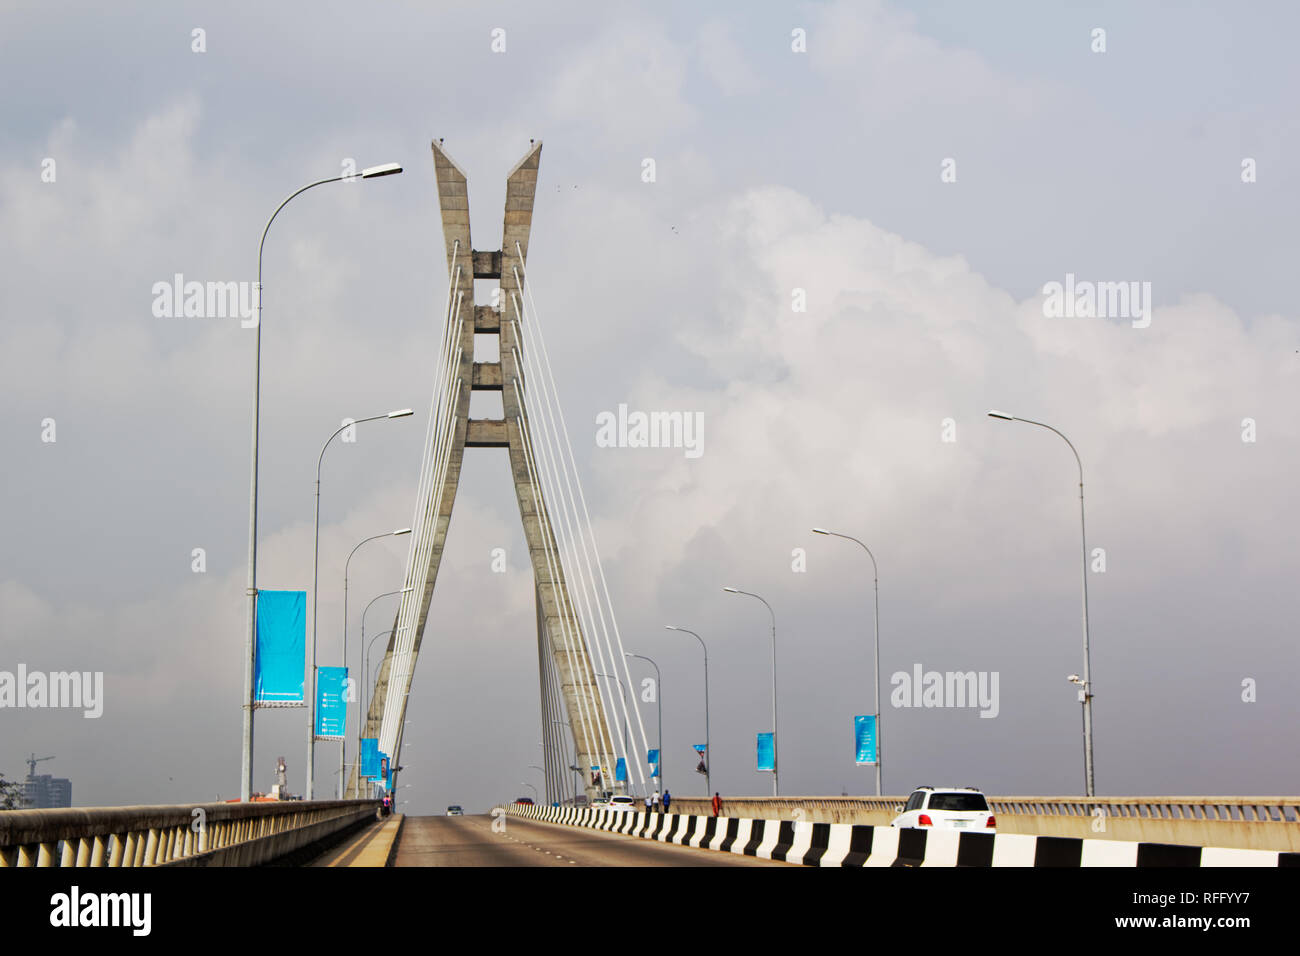 Pont à péage Lekki-Ikoyi, Lagos, Nigeria. Pont à câble. Banque D'Images